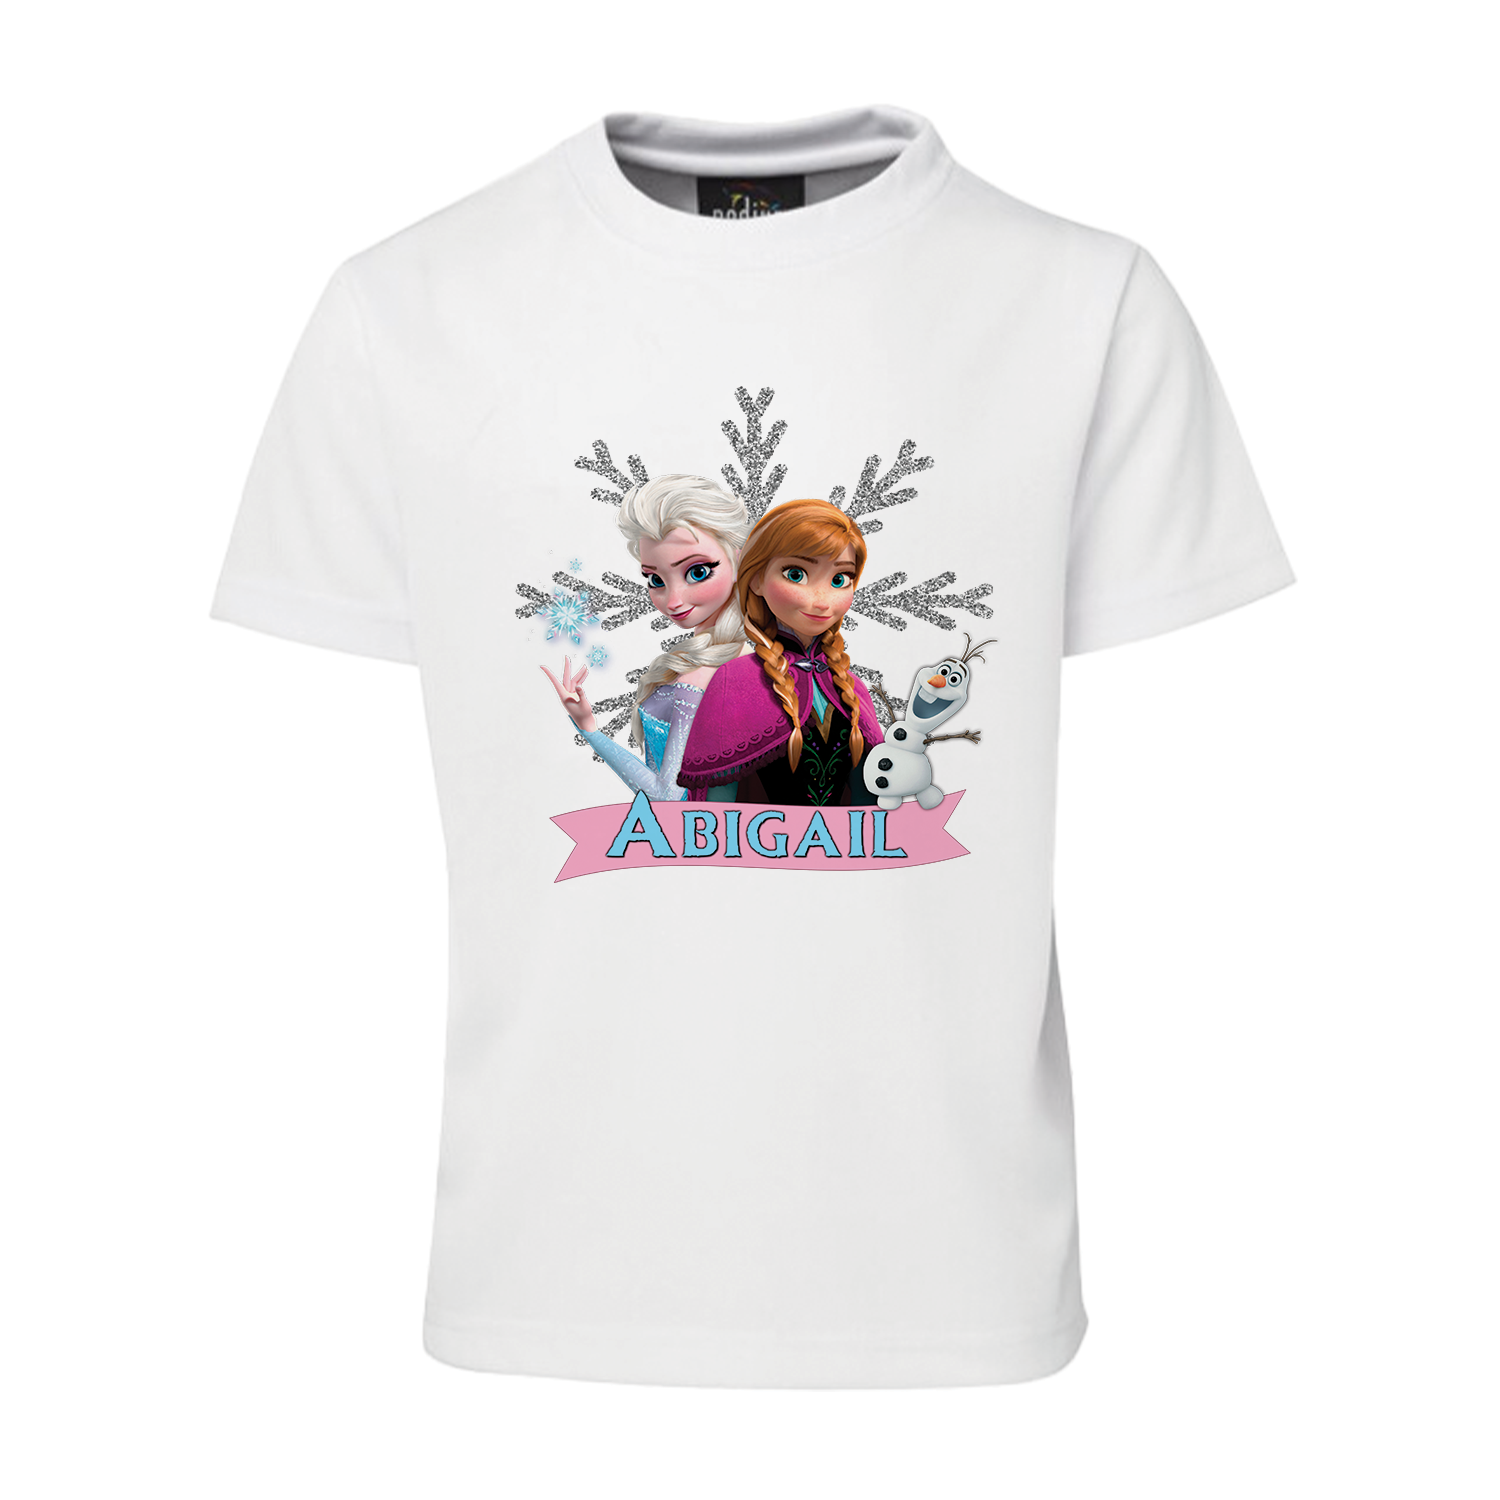 Frozen themed sublimation T-Shirt